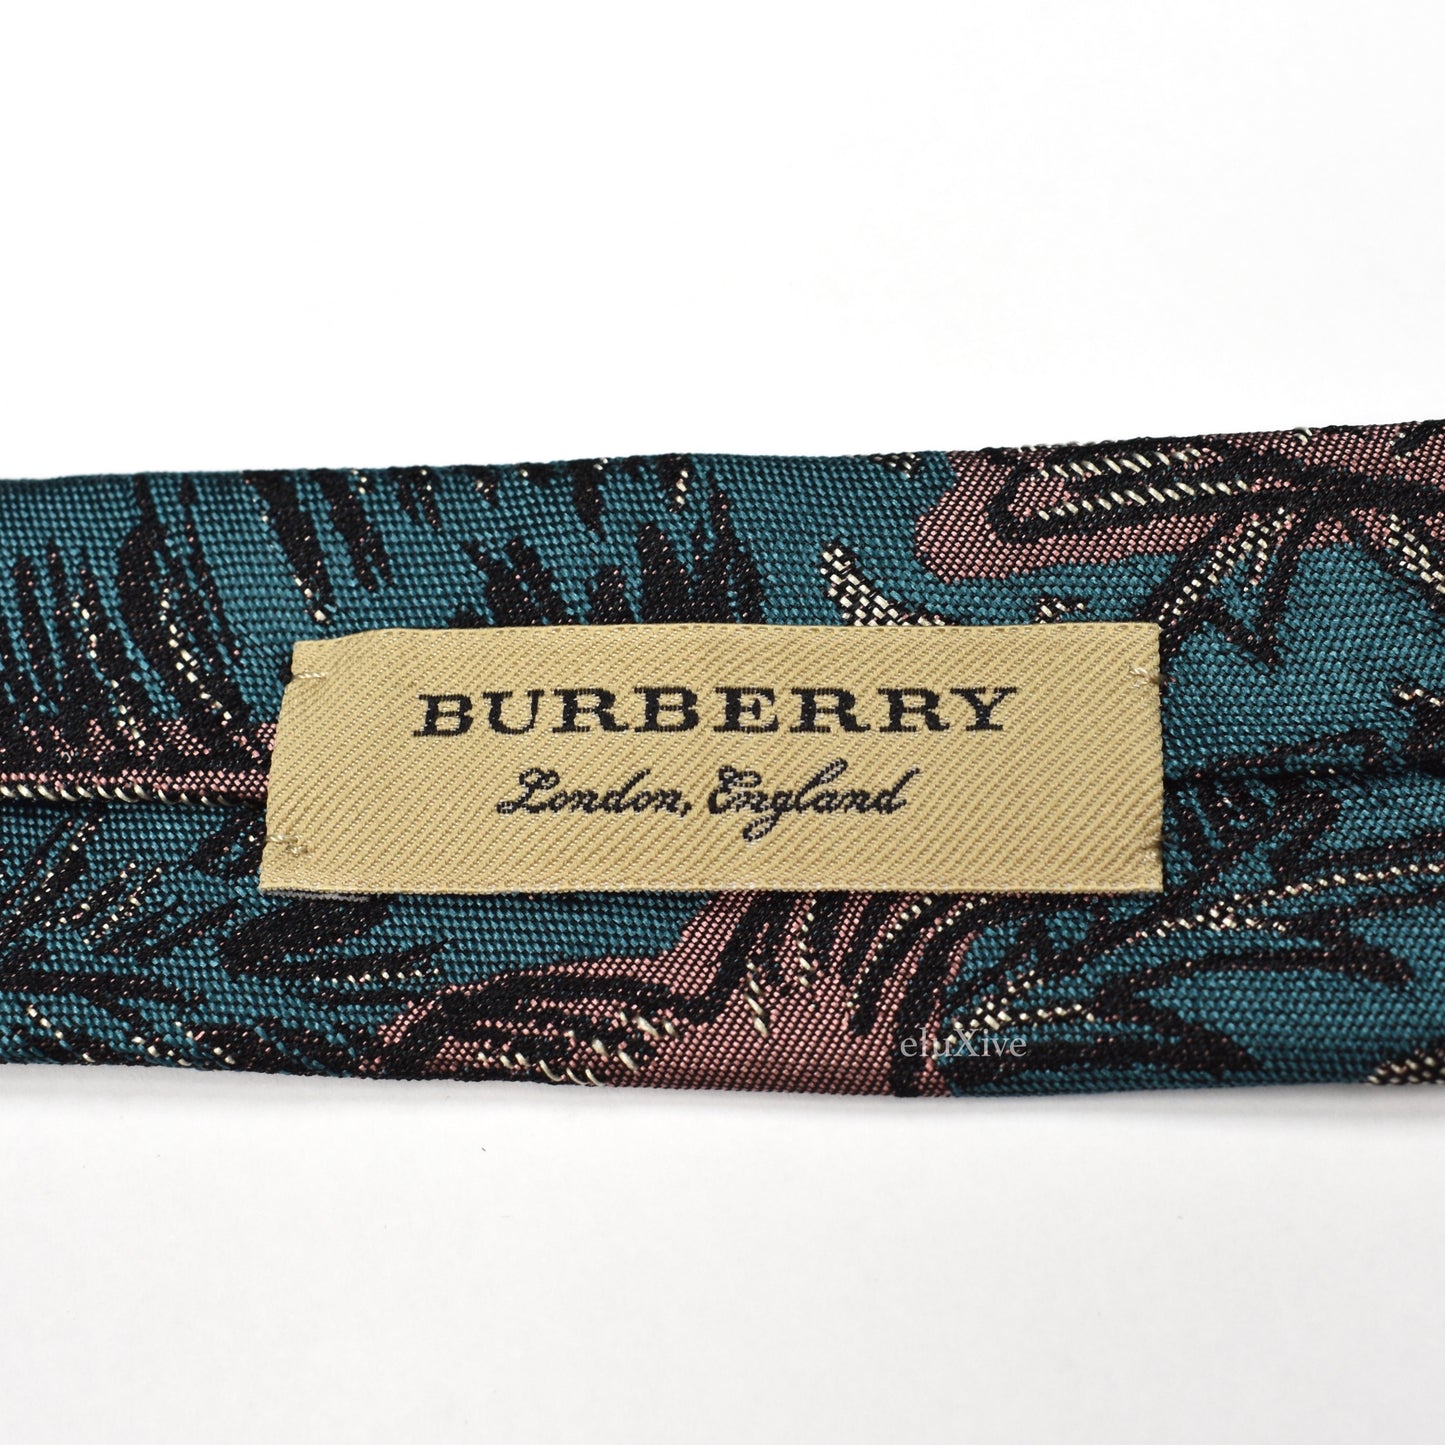 Burberry - Woven Animal Artwork Tie (Turquoise)